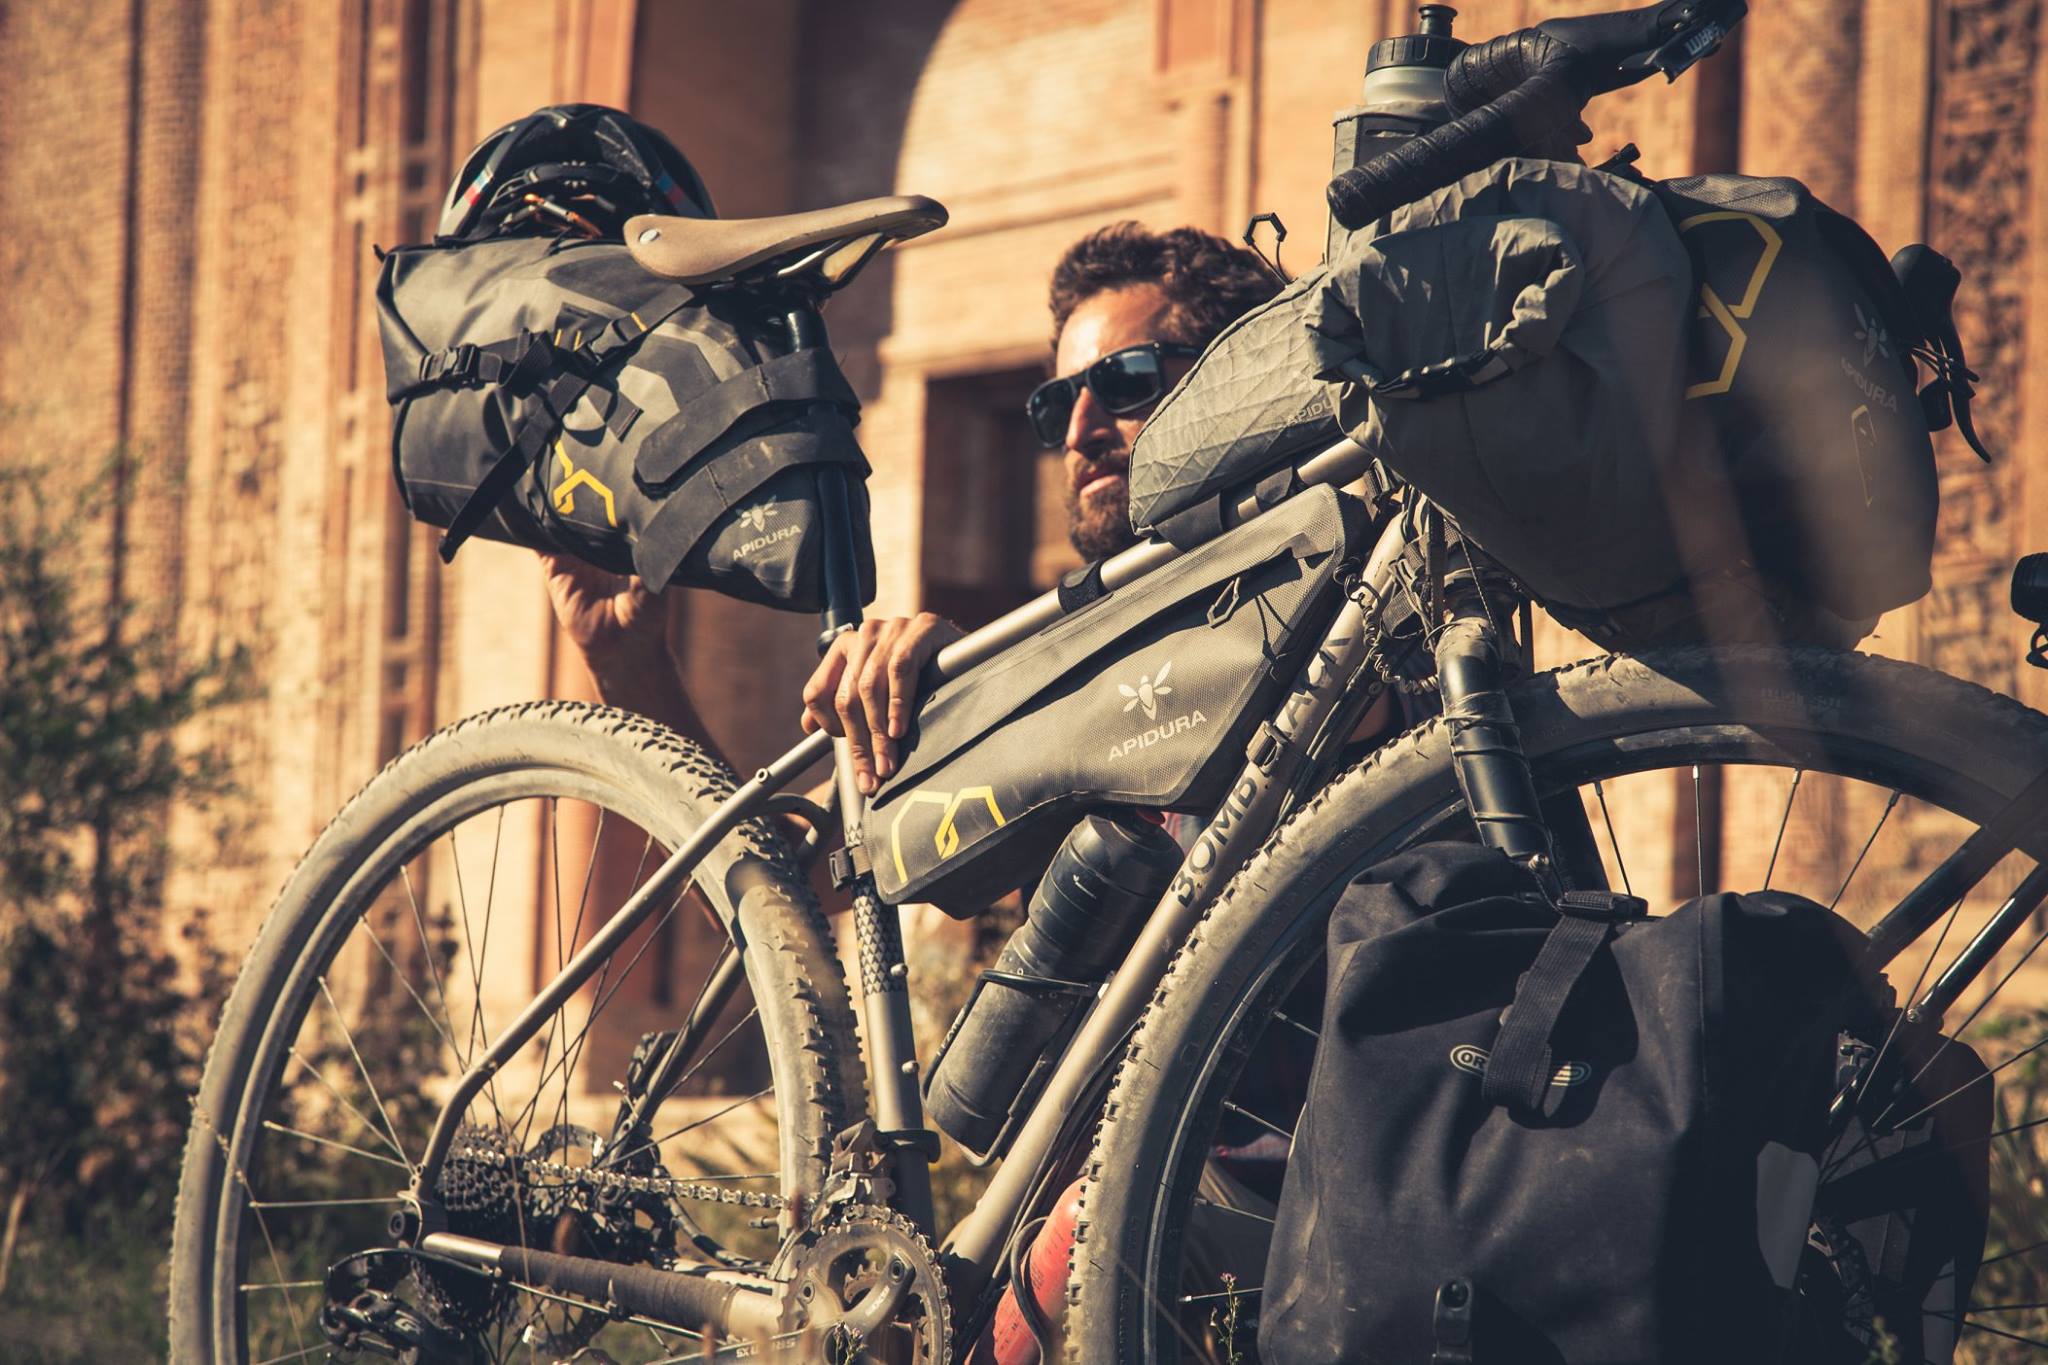 vente-accessoire-bike-packing-apidura-paris